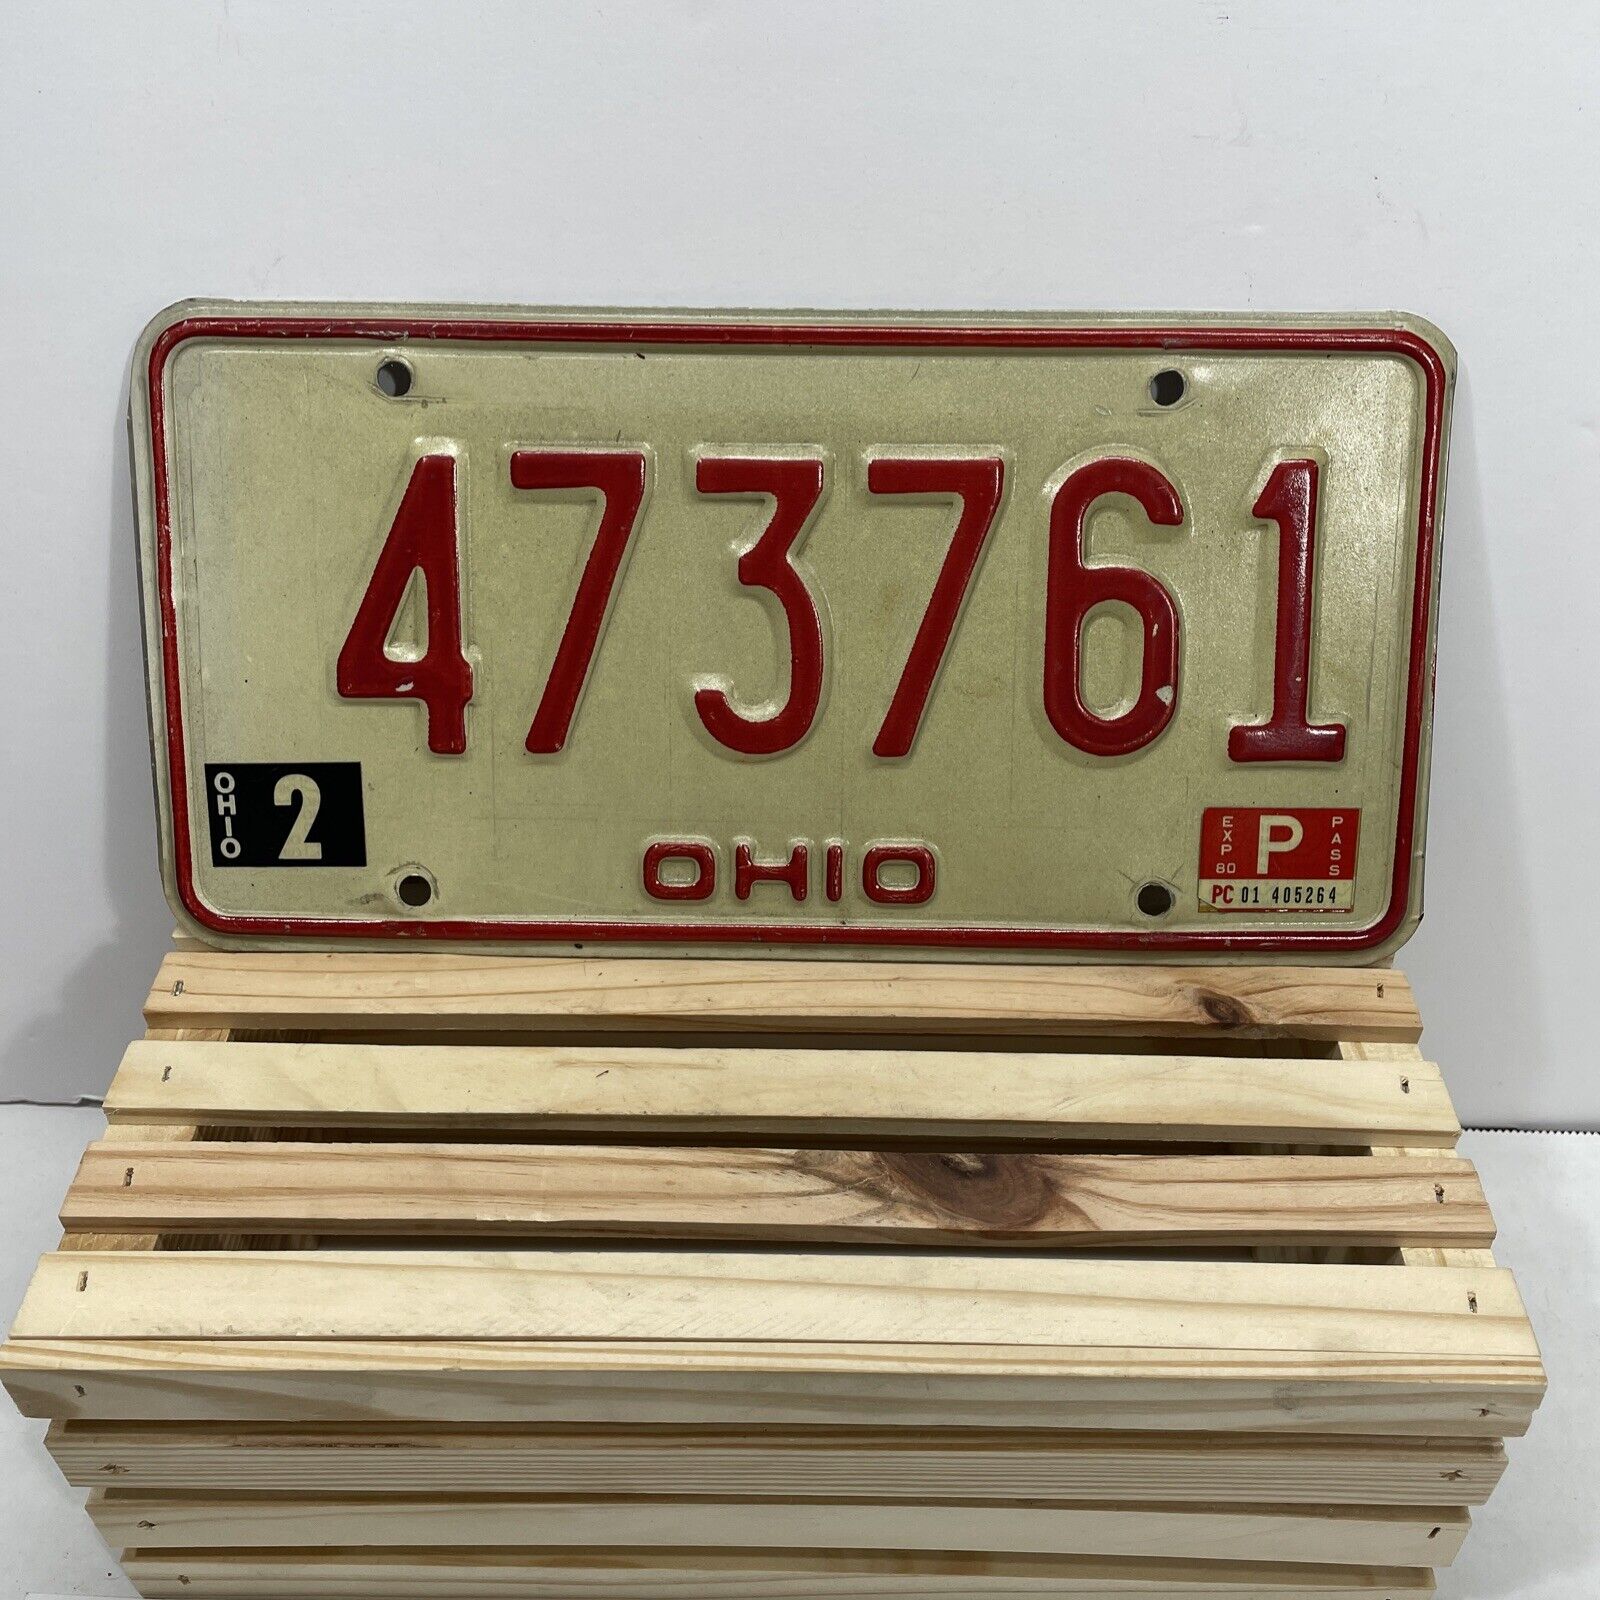 1979-80 Vintage Ohio License Plate Tag 473761 - Allen County